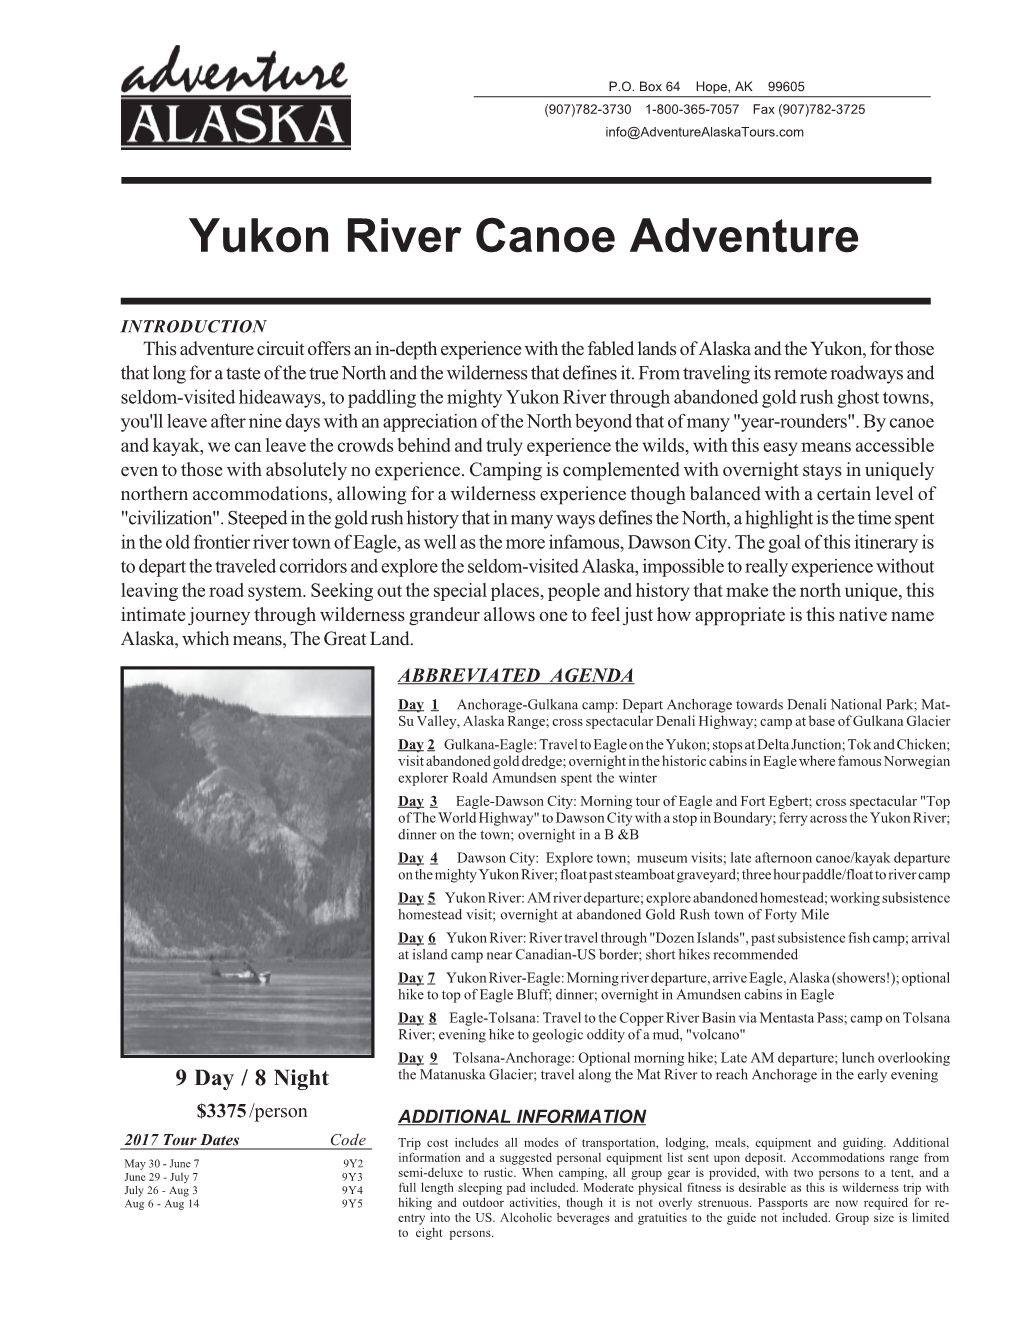 Yukon River Canoe Adventure